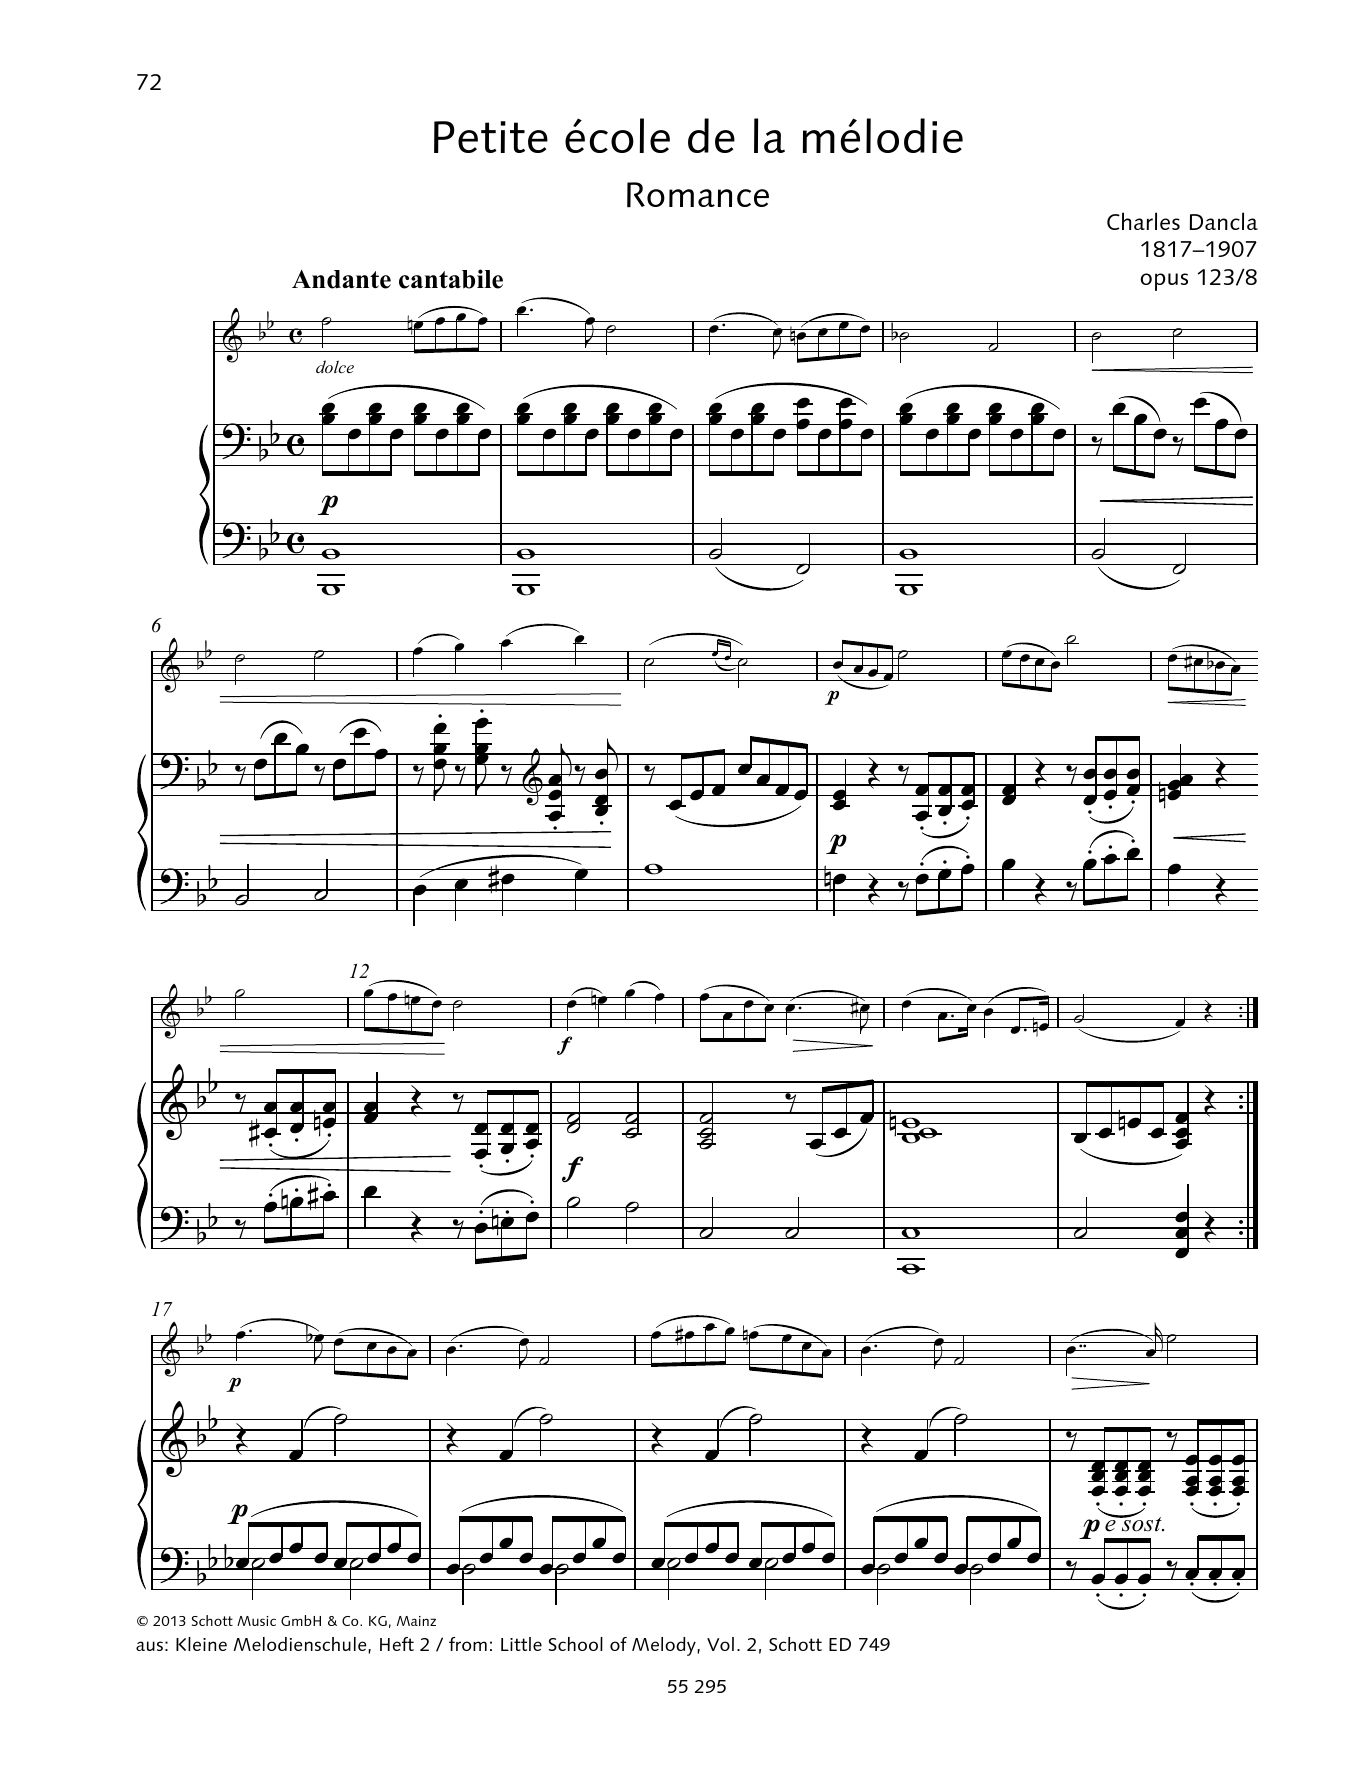 Charles Dancla Petite école de la mélodie Sheet Music Notes & Chords for String Solo - Download or Print PDF